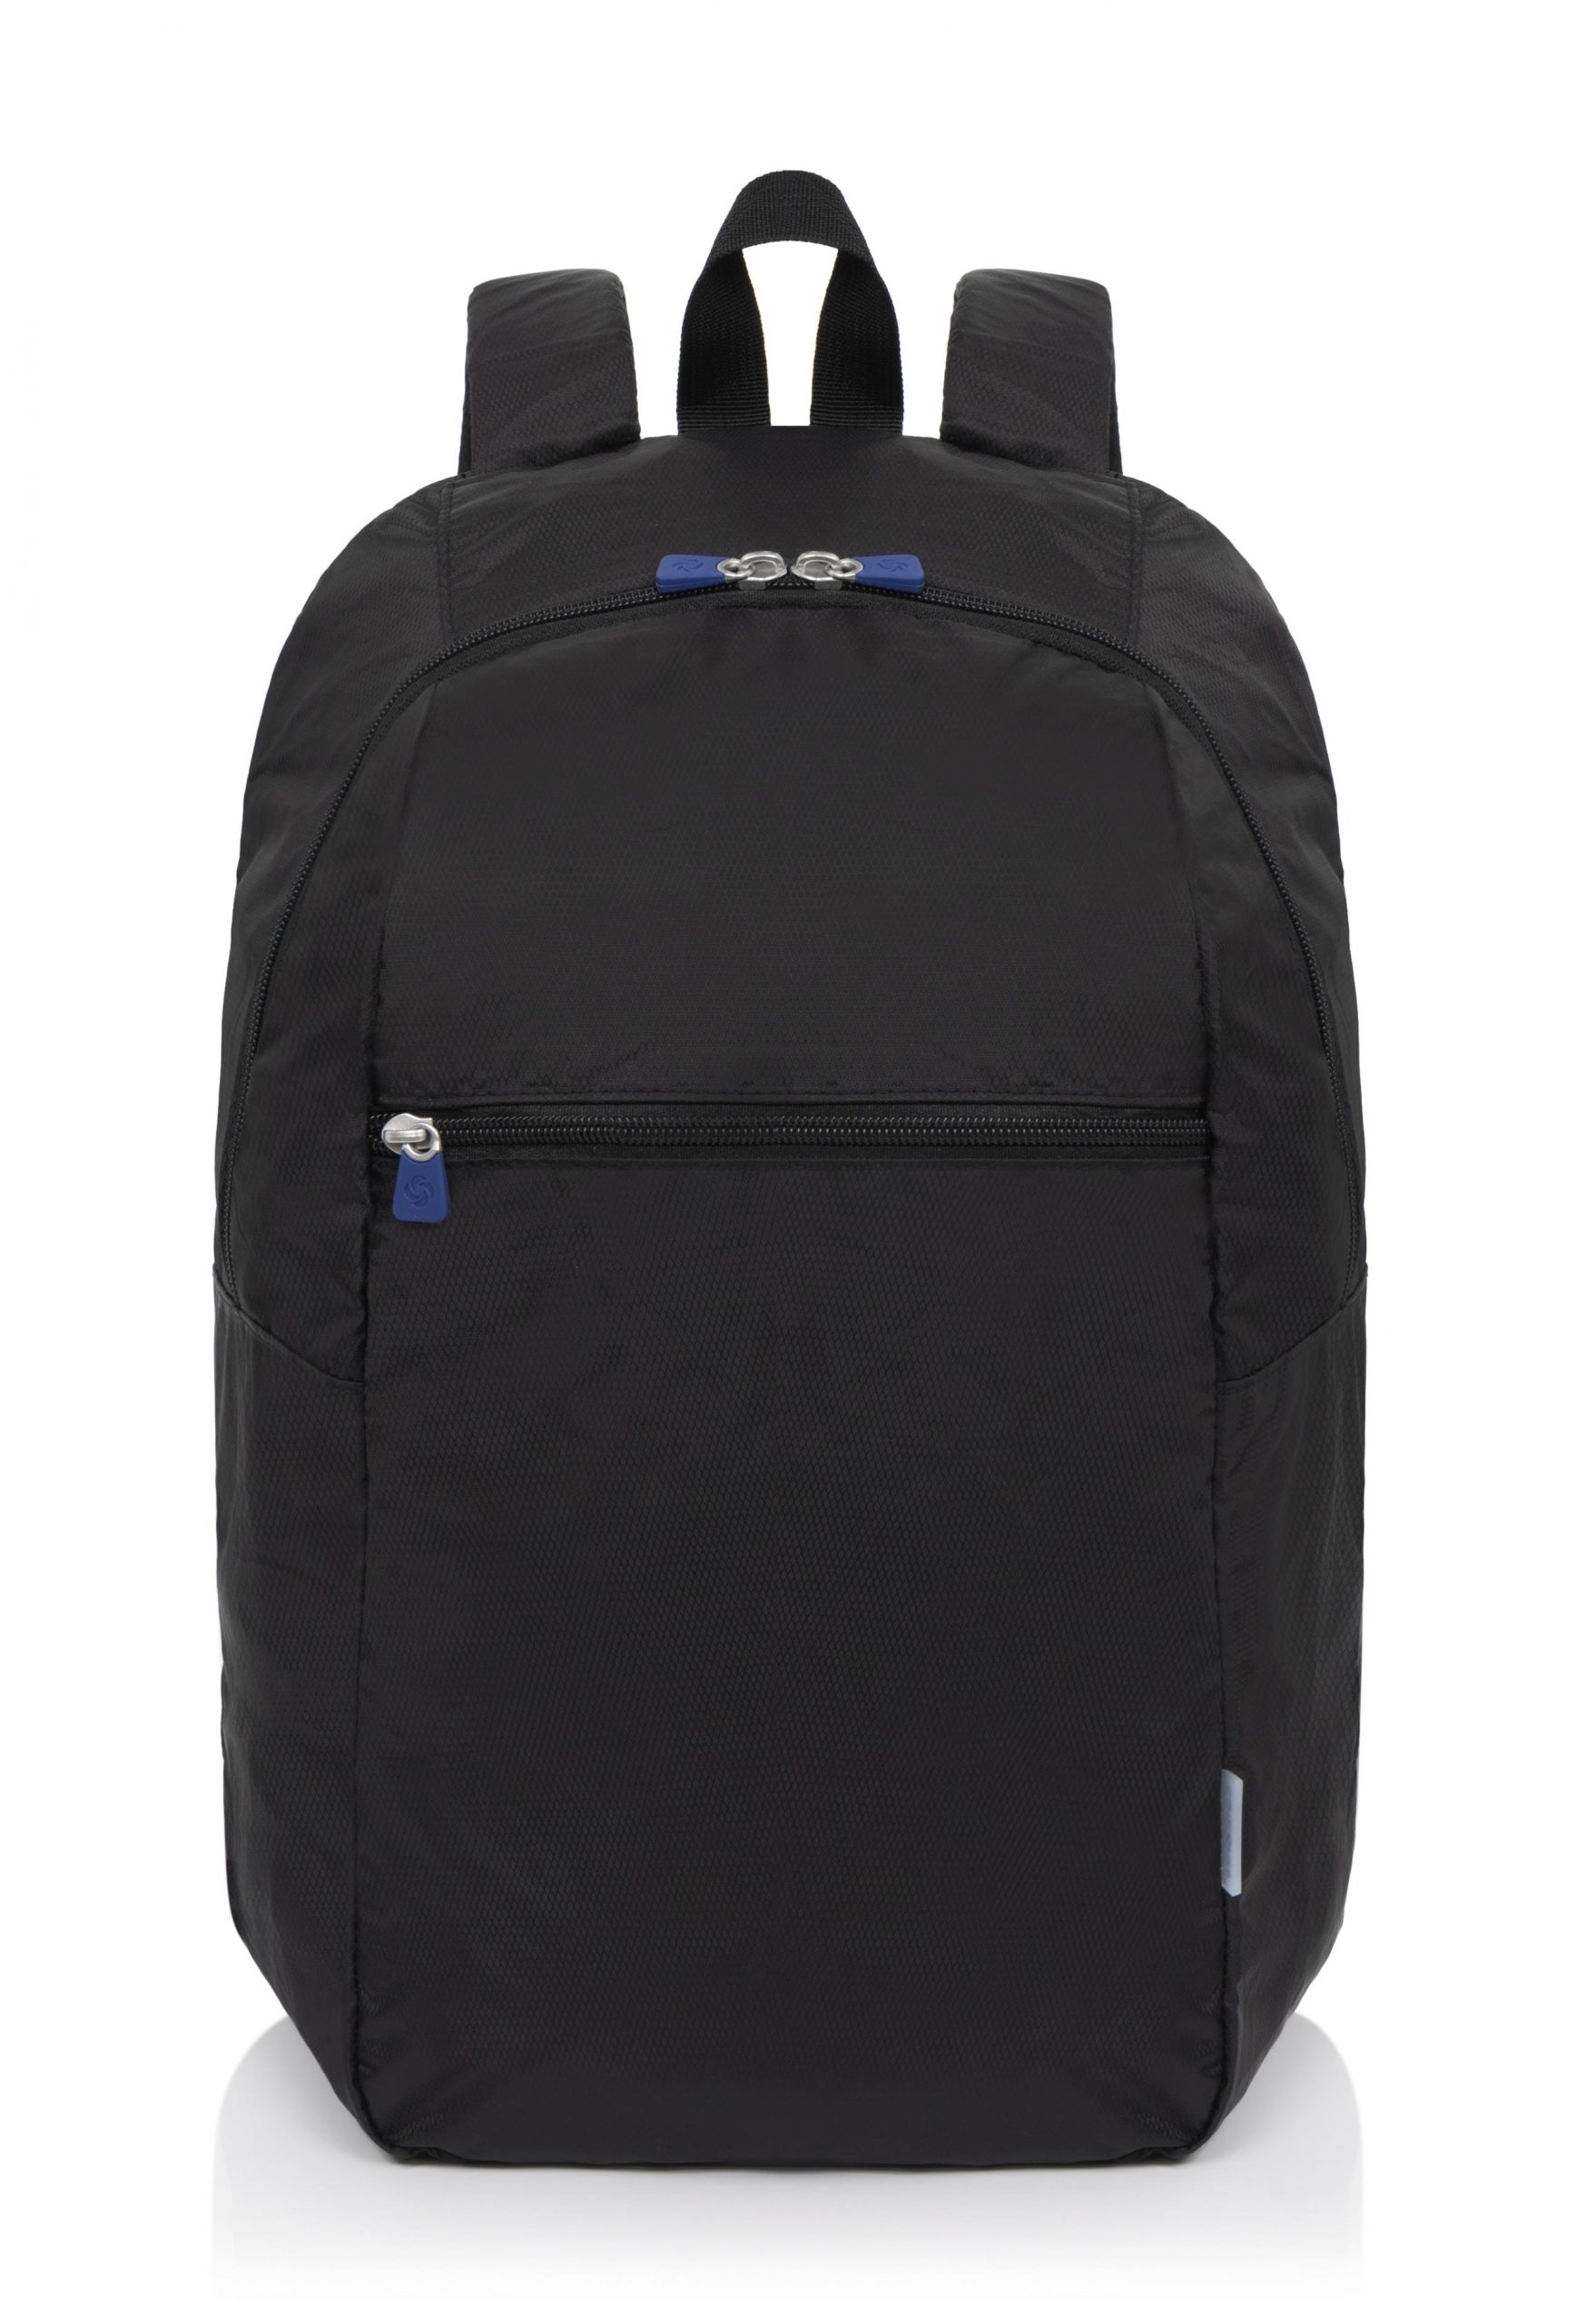 travel backpack foldable